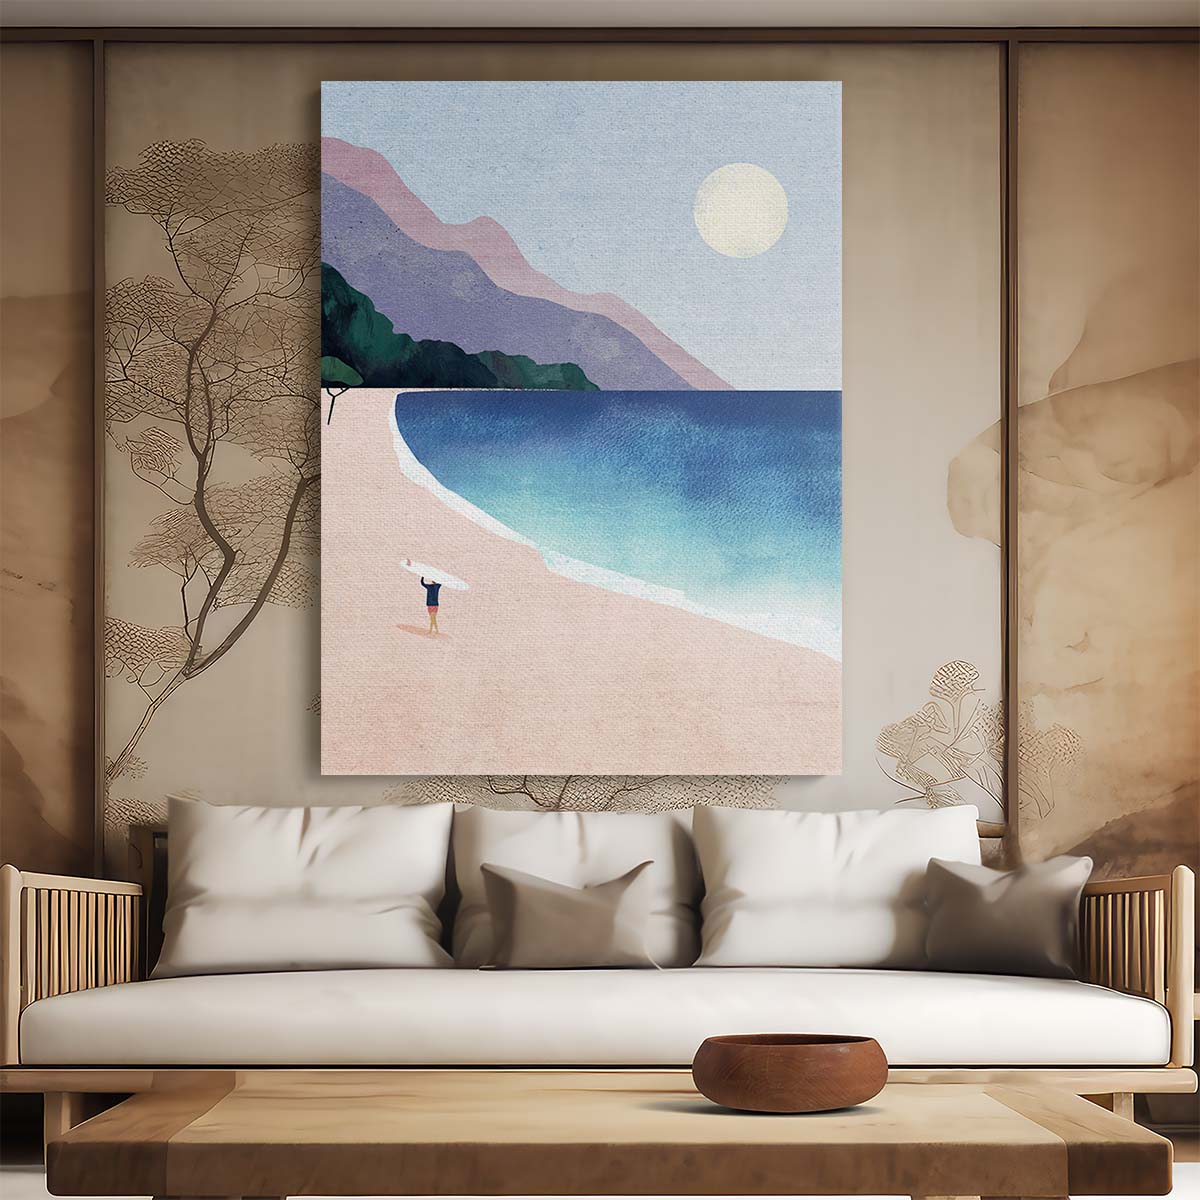 Hawaiian Surf Beach Illustration, Colorful Coastal Seascape Artwork by Luxuriance Designs, made in USA